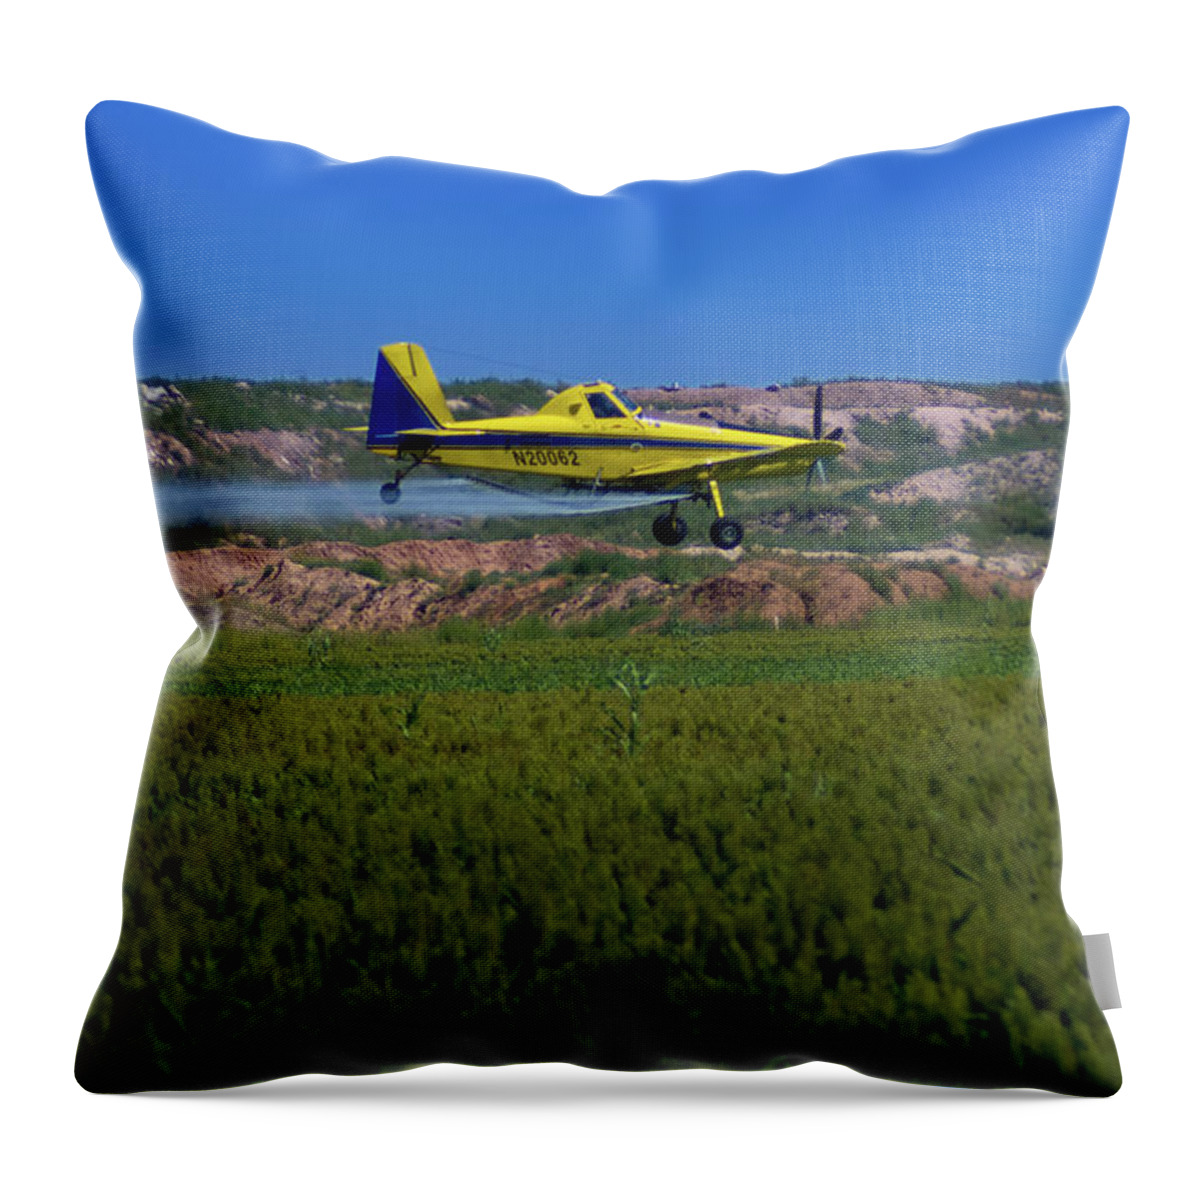 West Texas Throw Pillow featuring the photograph West Texas Airforce by Adam Reinhart